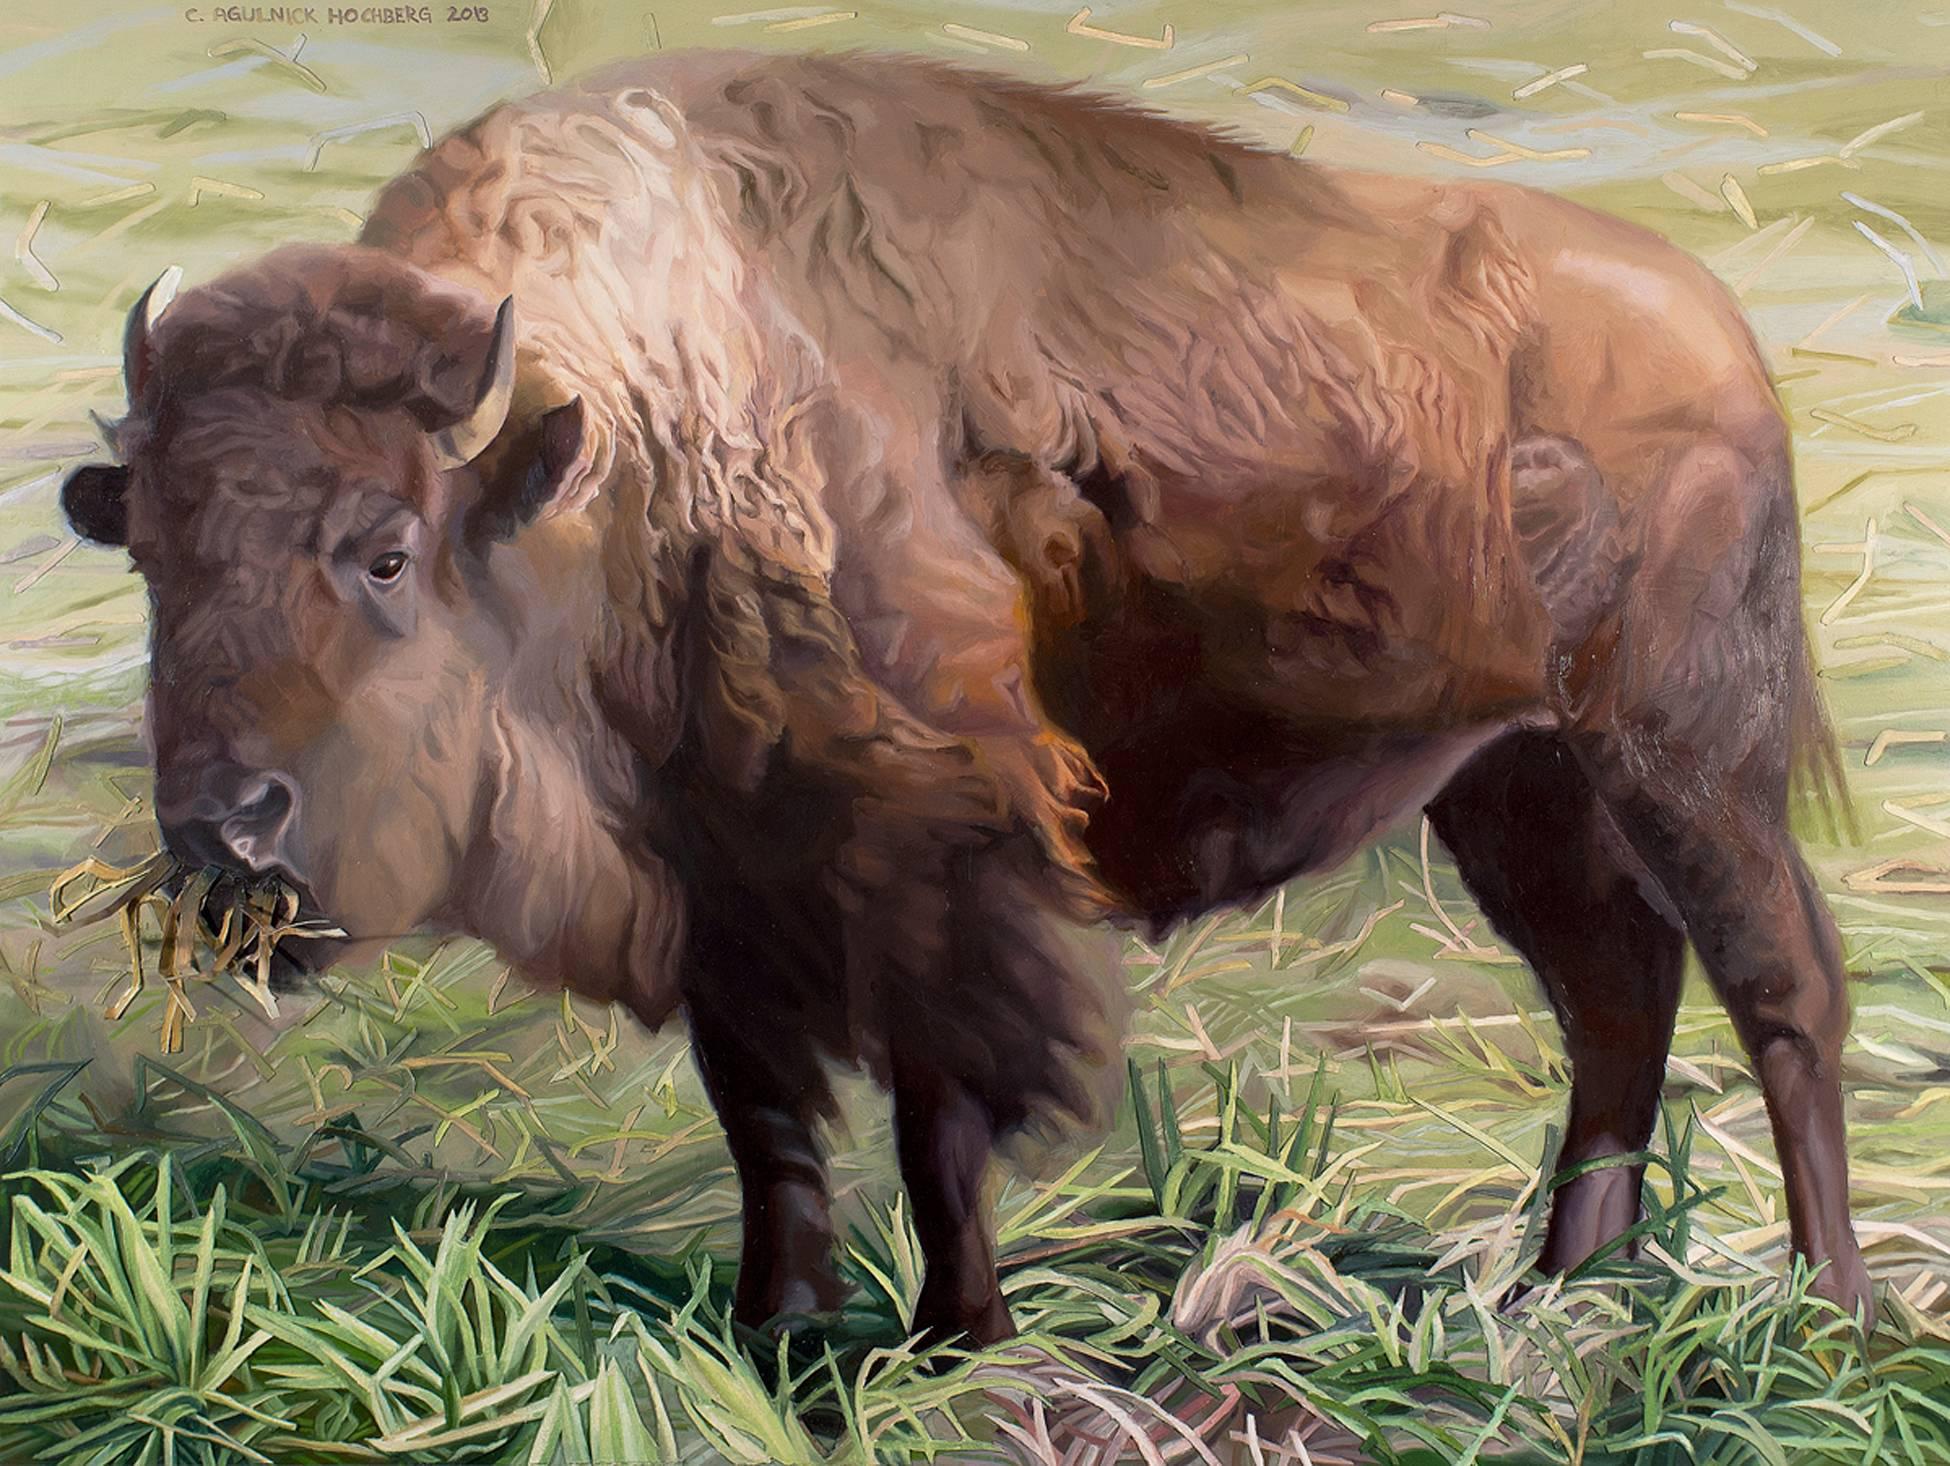 Cheryl Agulnick Hochberg Animal Painting - Slovenly Bison